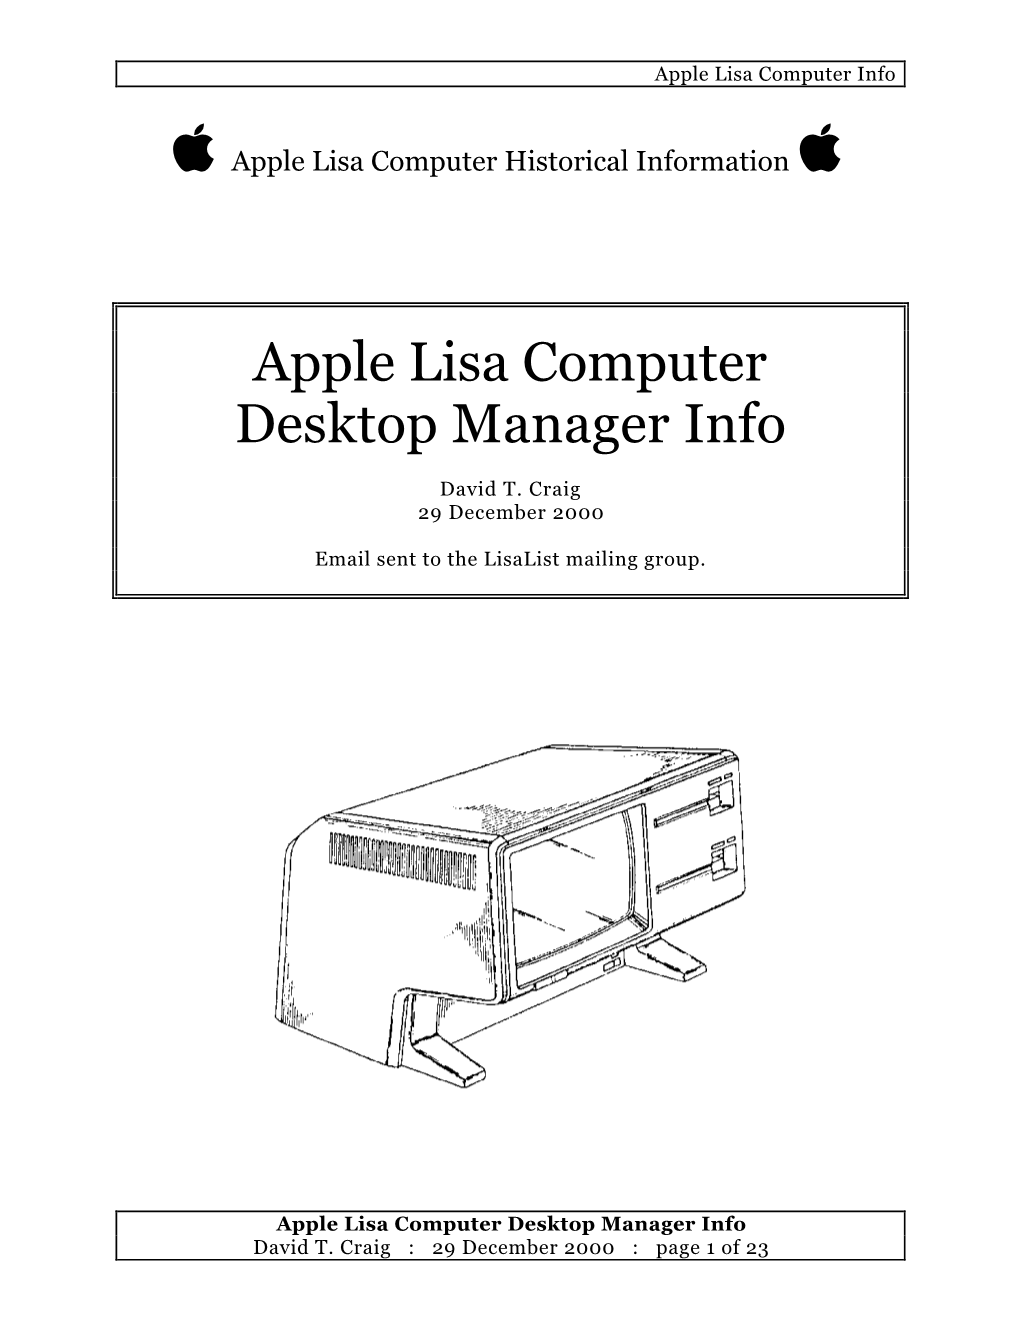 Apple Lisa Computer Desktop Manager Info